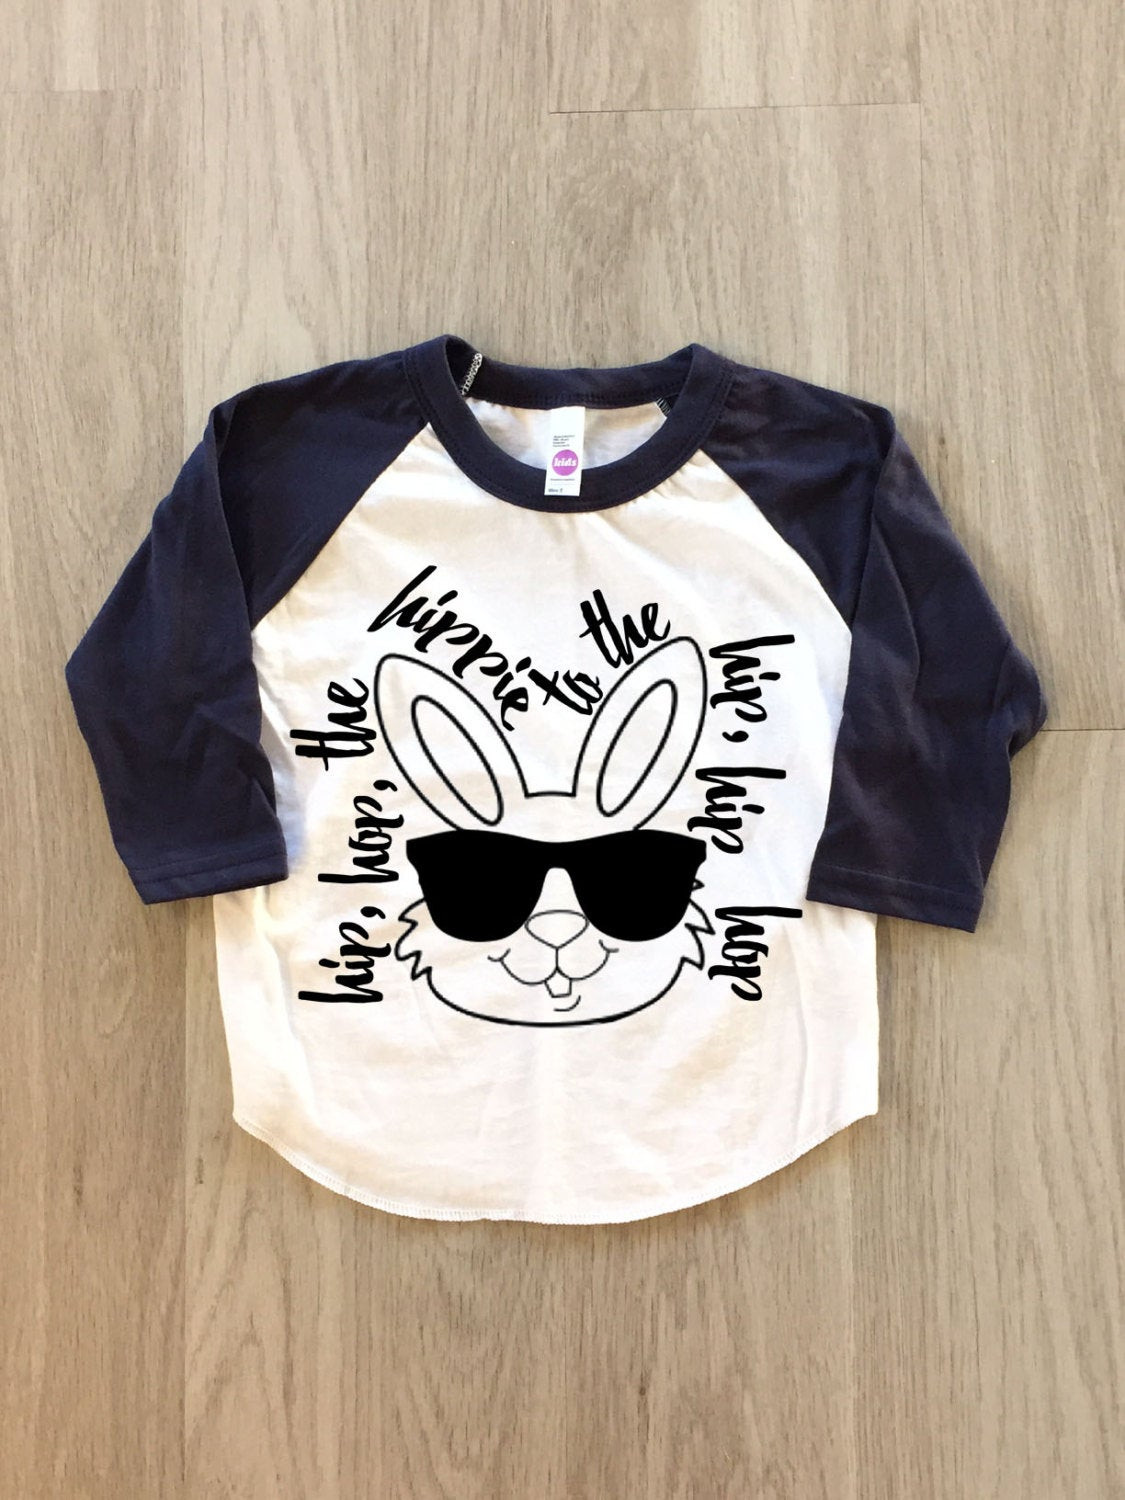 Easter Shirt Ideas
 Hip Hop Easter Shirt baby boy or girl clothes toddler shirt